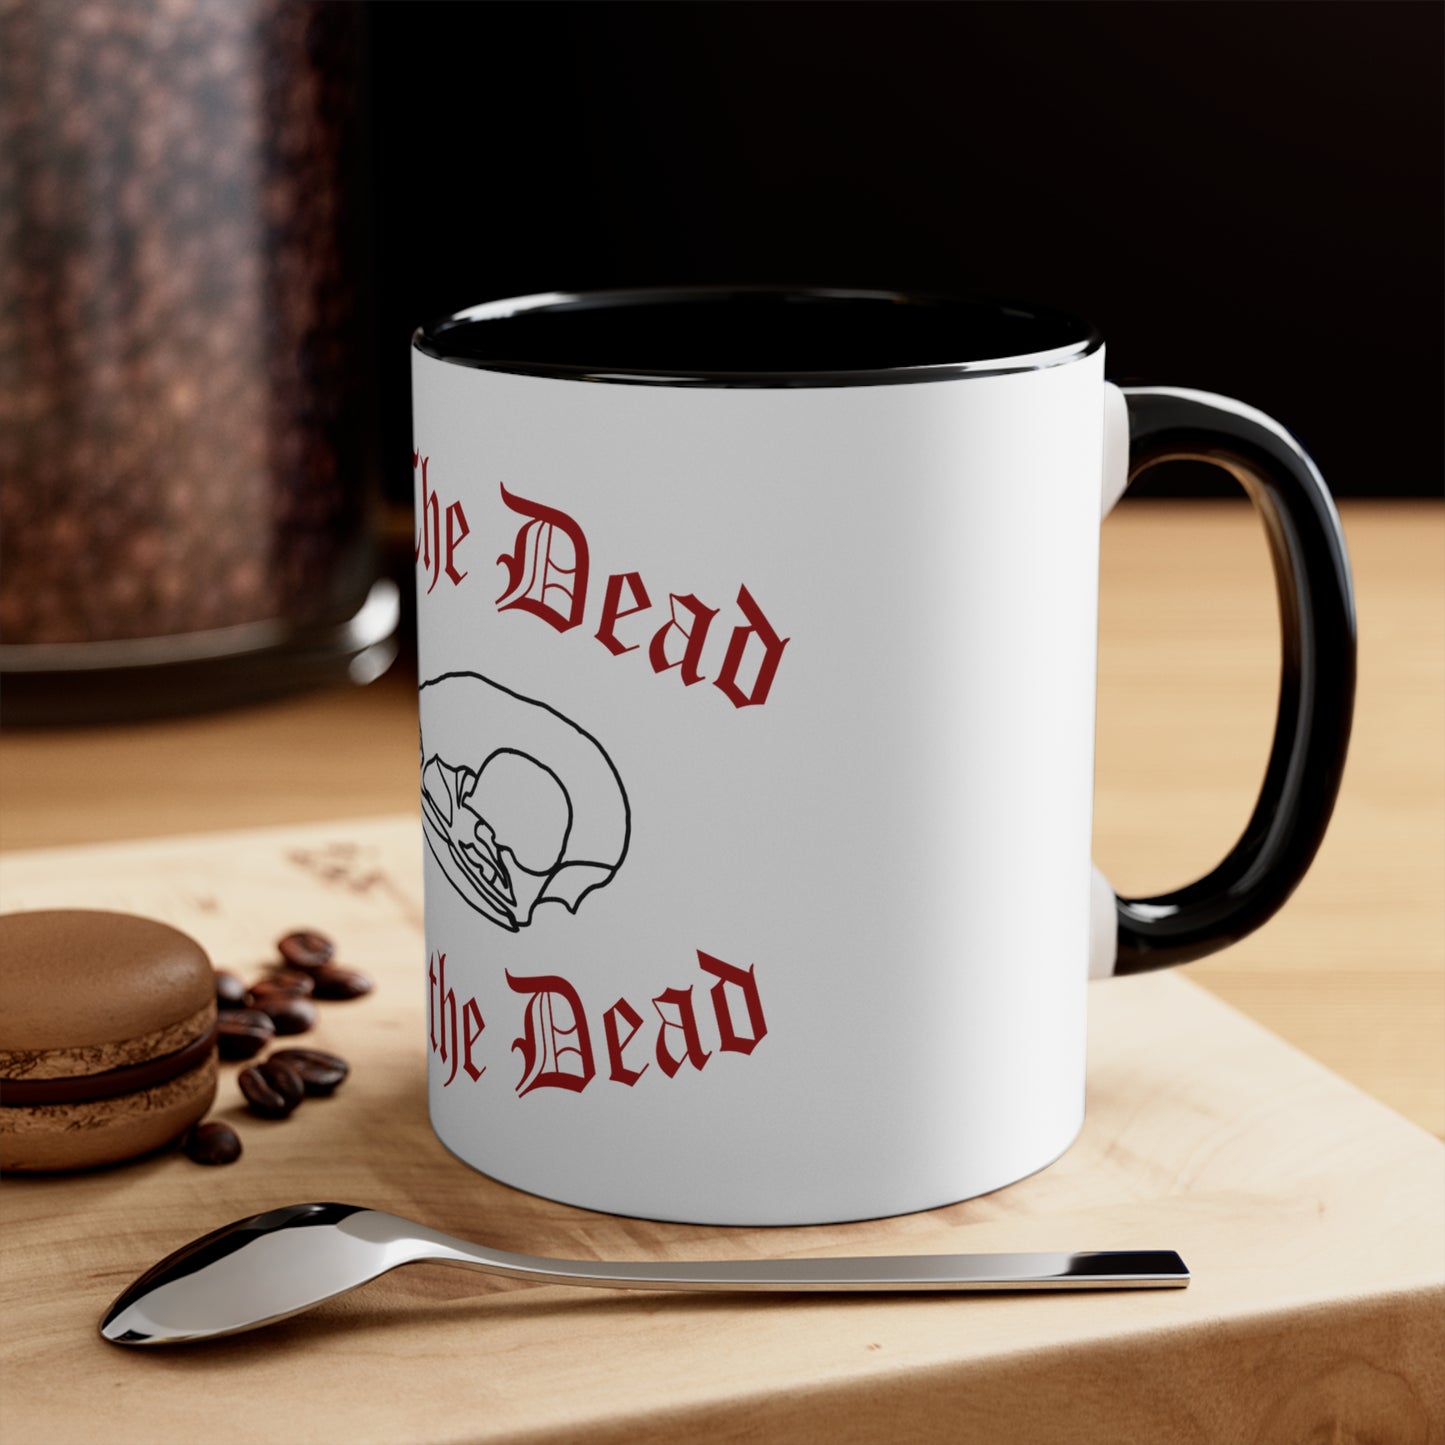 Let The Dead Bury The Dead Accent Coffee Mug, 11oz